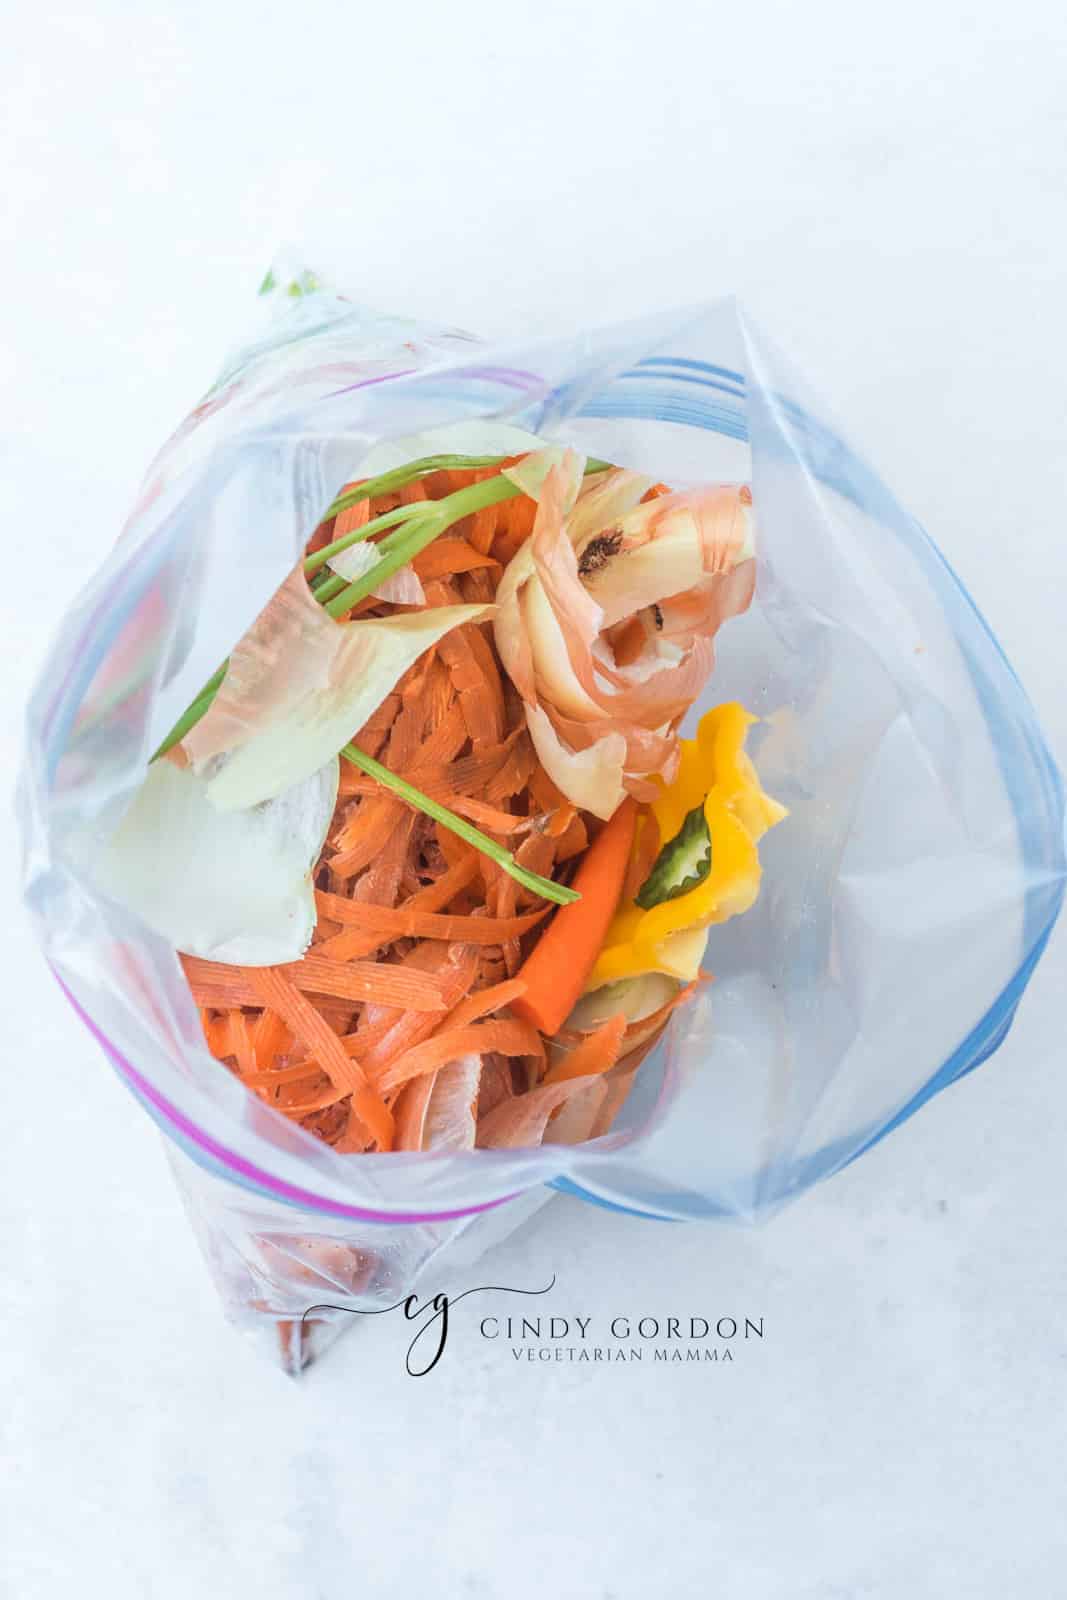 shredded vegetables in a ziplock bag